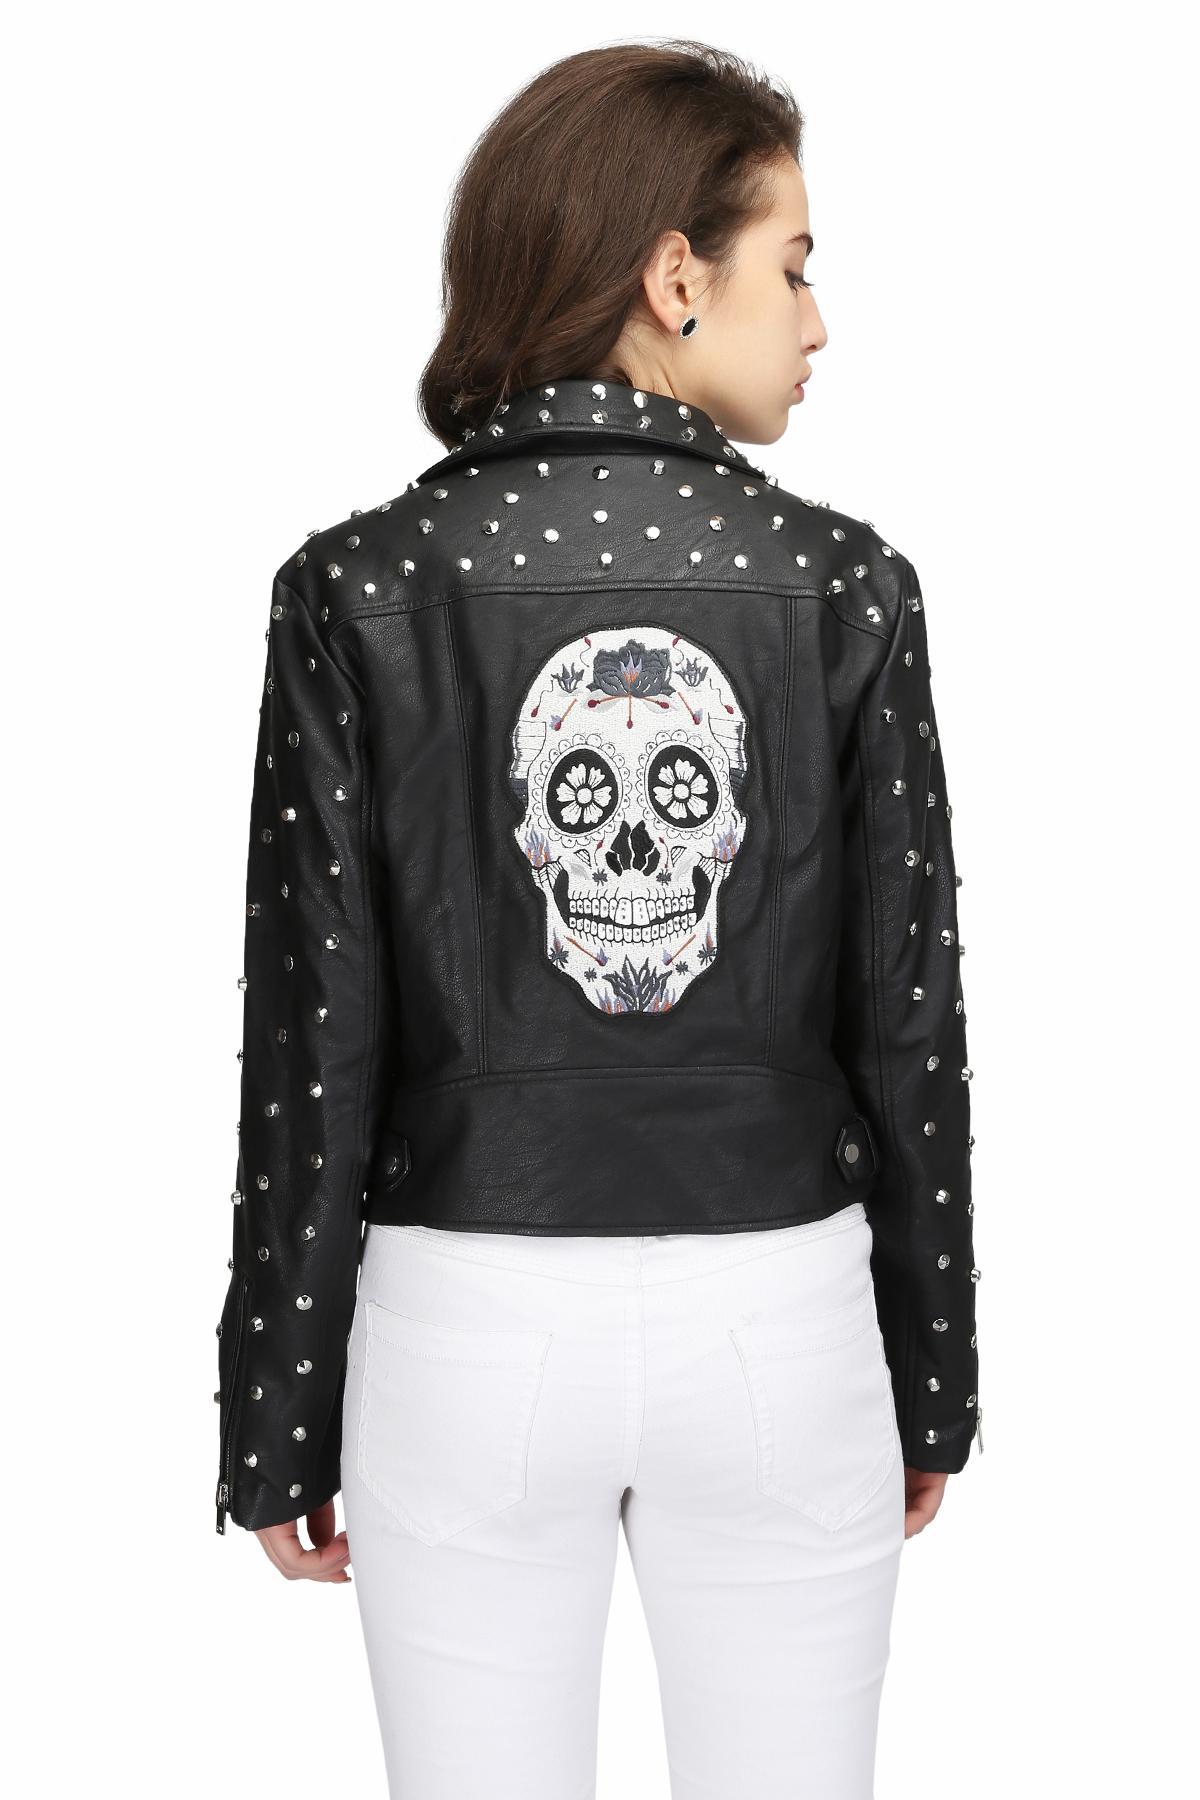 Black Skull Bikers Jacket by Zara for 